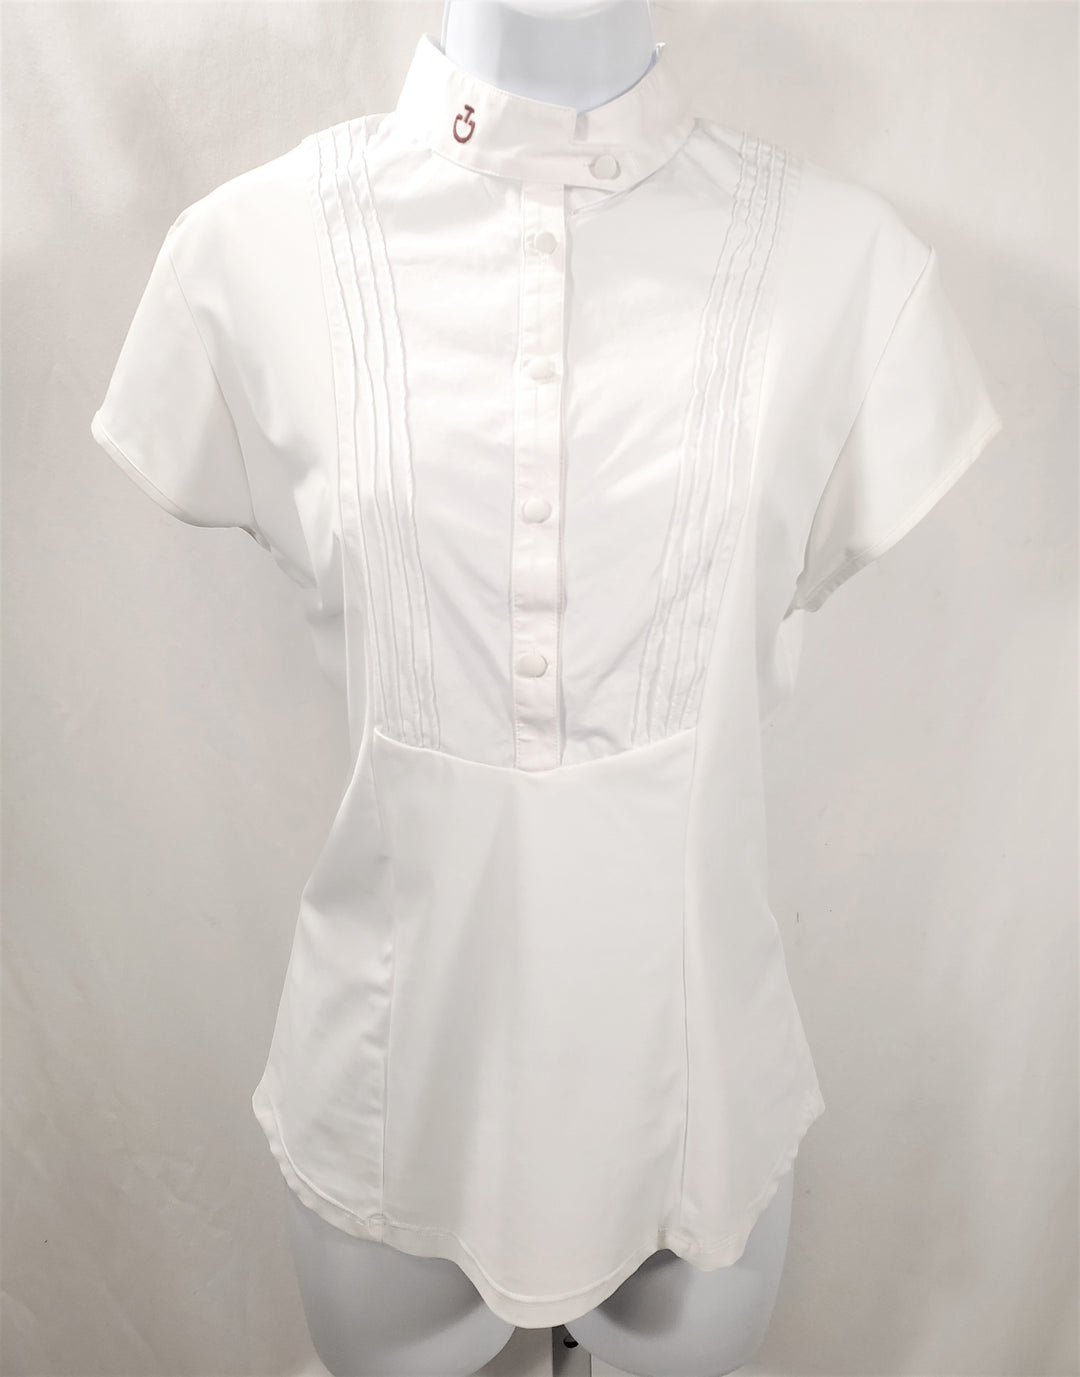 Cavalleria Toscana Ladies Short Sleeve Shirt With Bib - New!